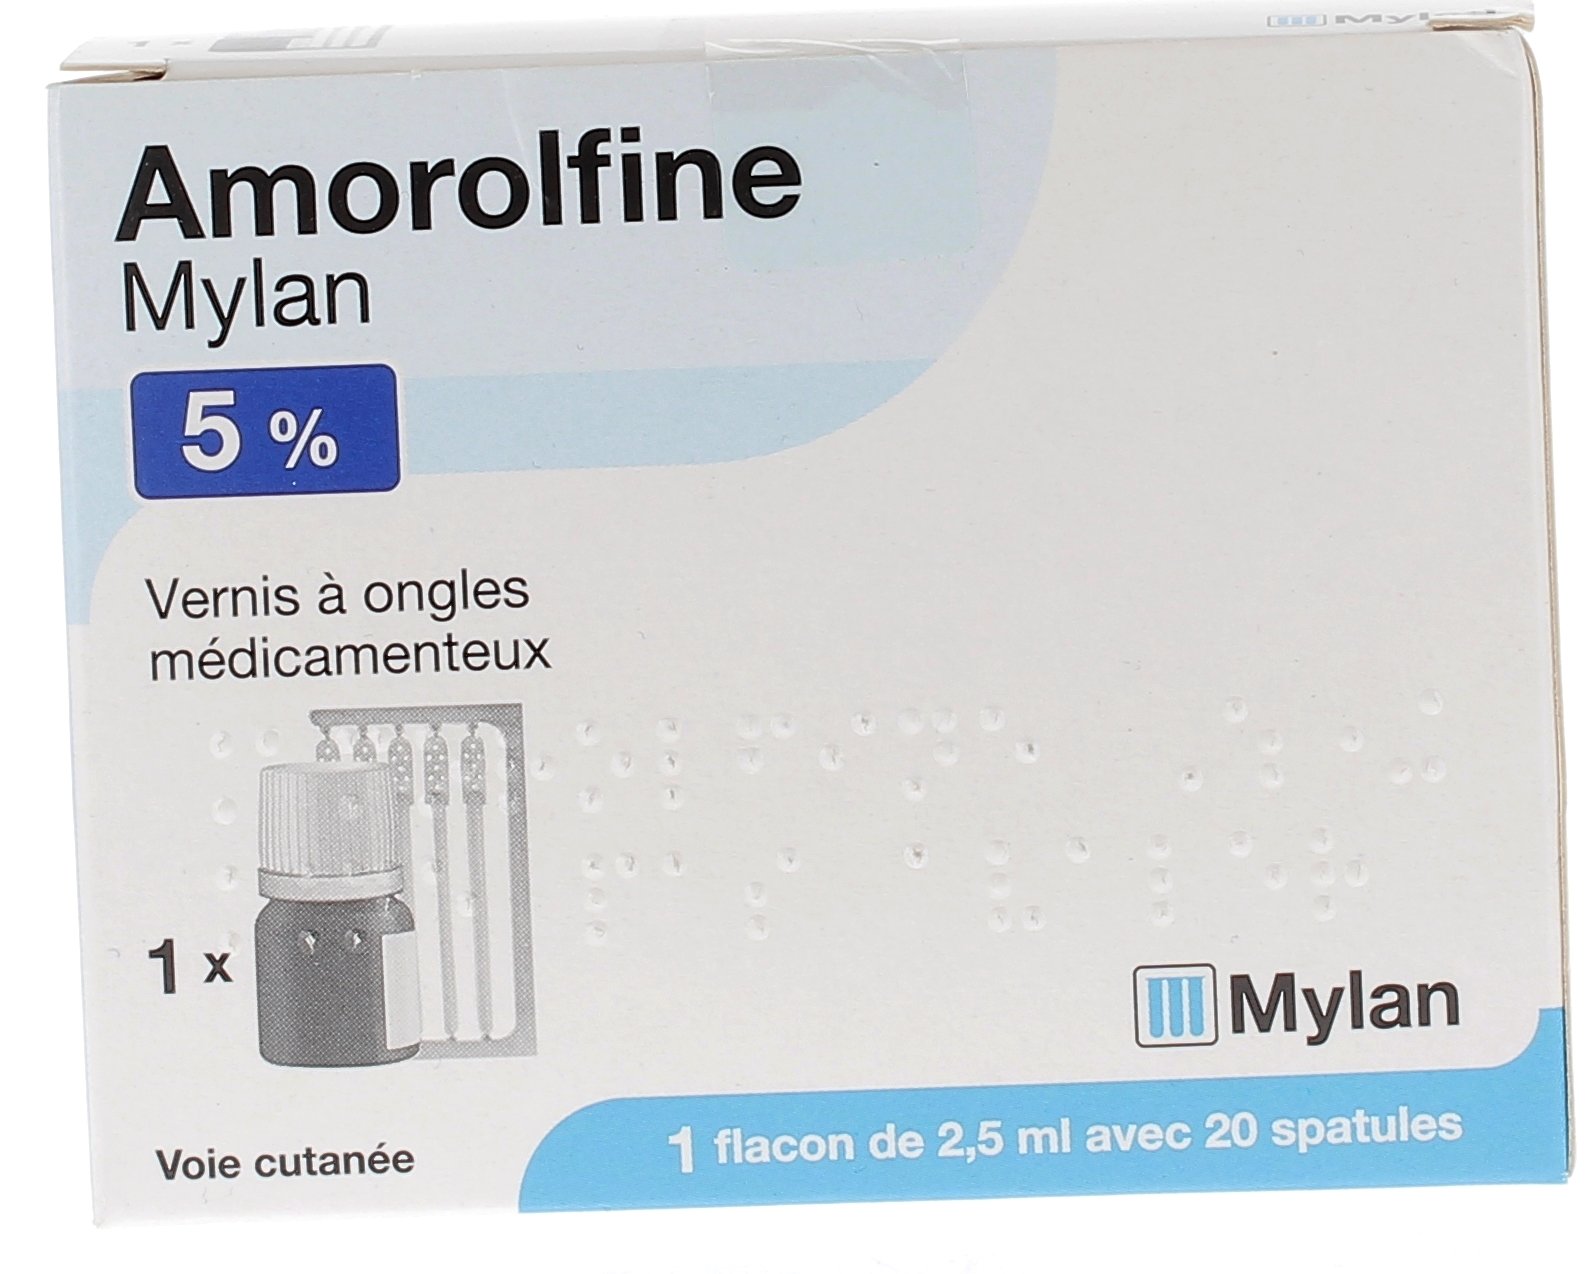 Amorolfine Mylan 5% - 1 vernis à ongles médicamenteux